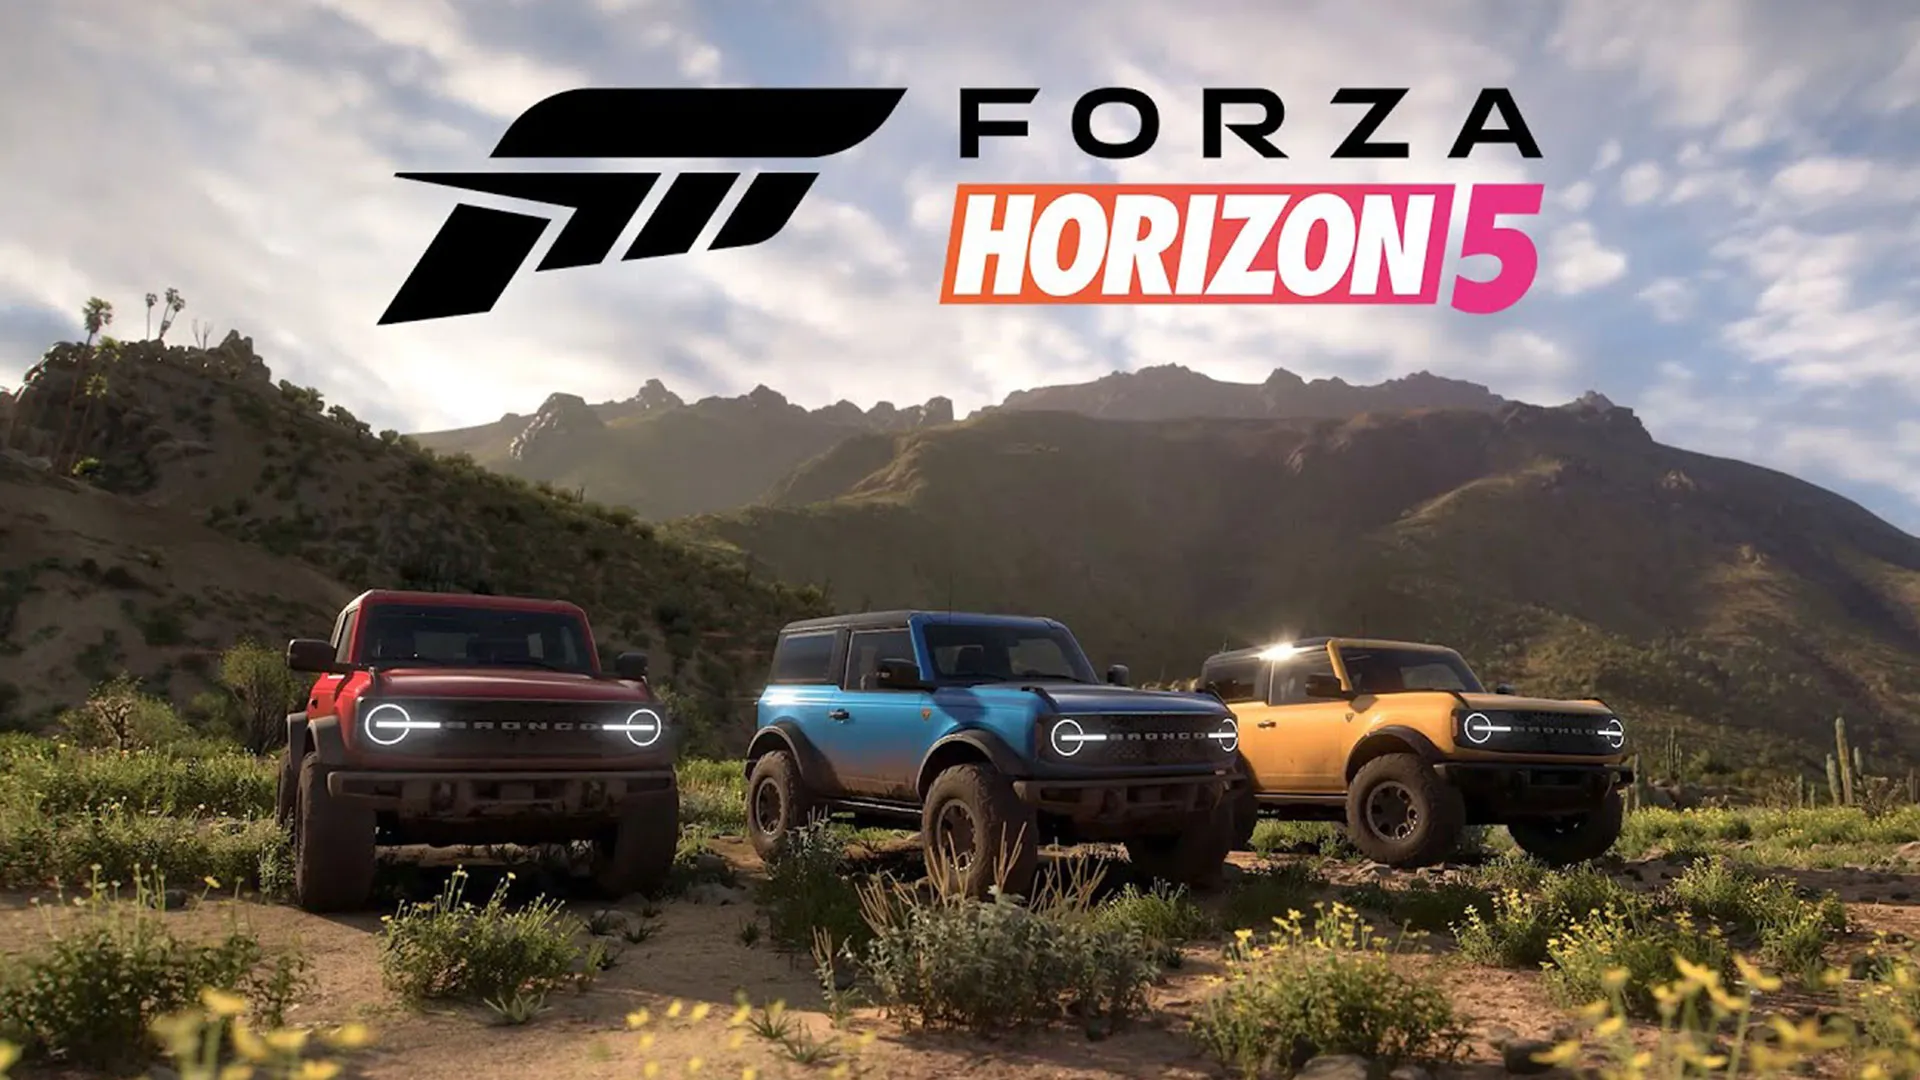 Forza horizon 5 игруха. Ford Bronco Forza Horizon 5. Игра Forza Horizon 5. Ford Bronco 2021 Forza Horizon 5. Forza Horizon 5 Xbox.